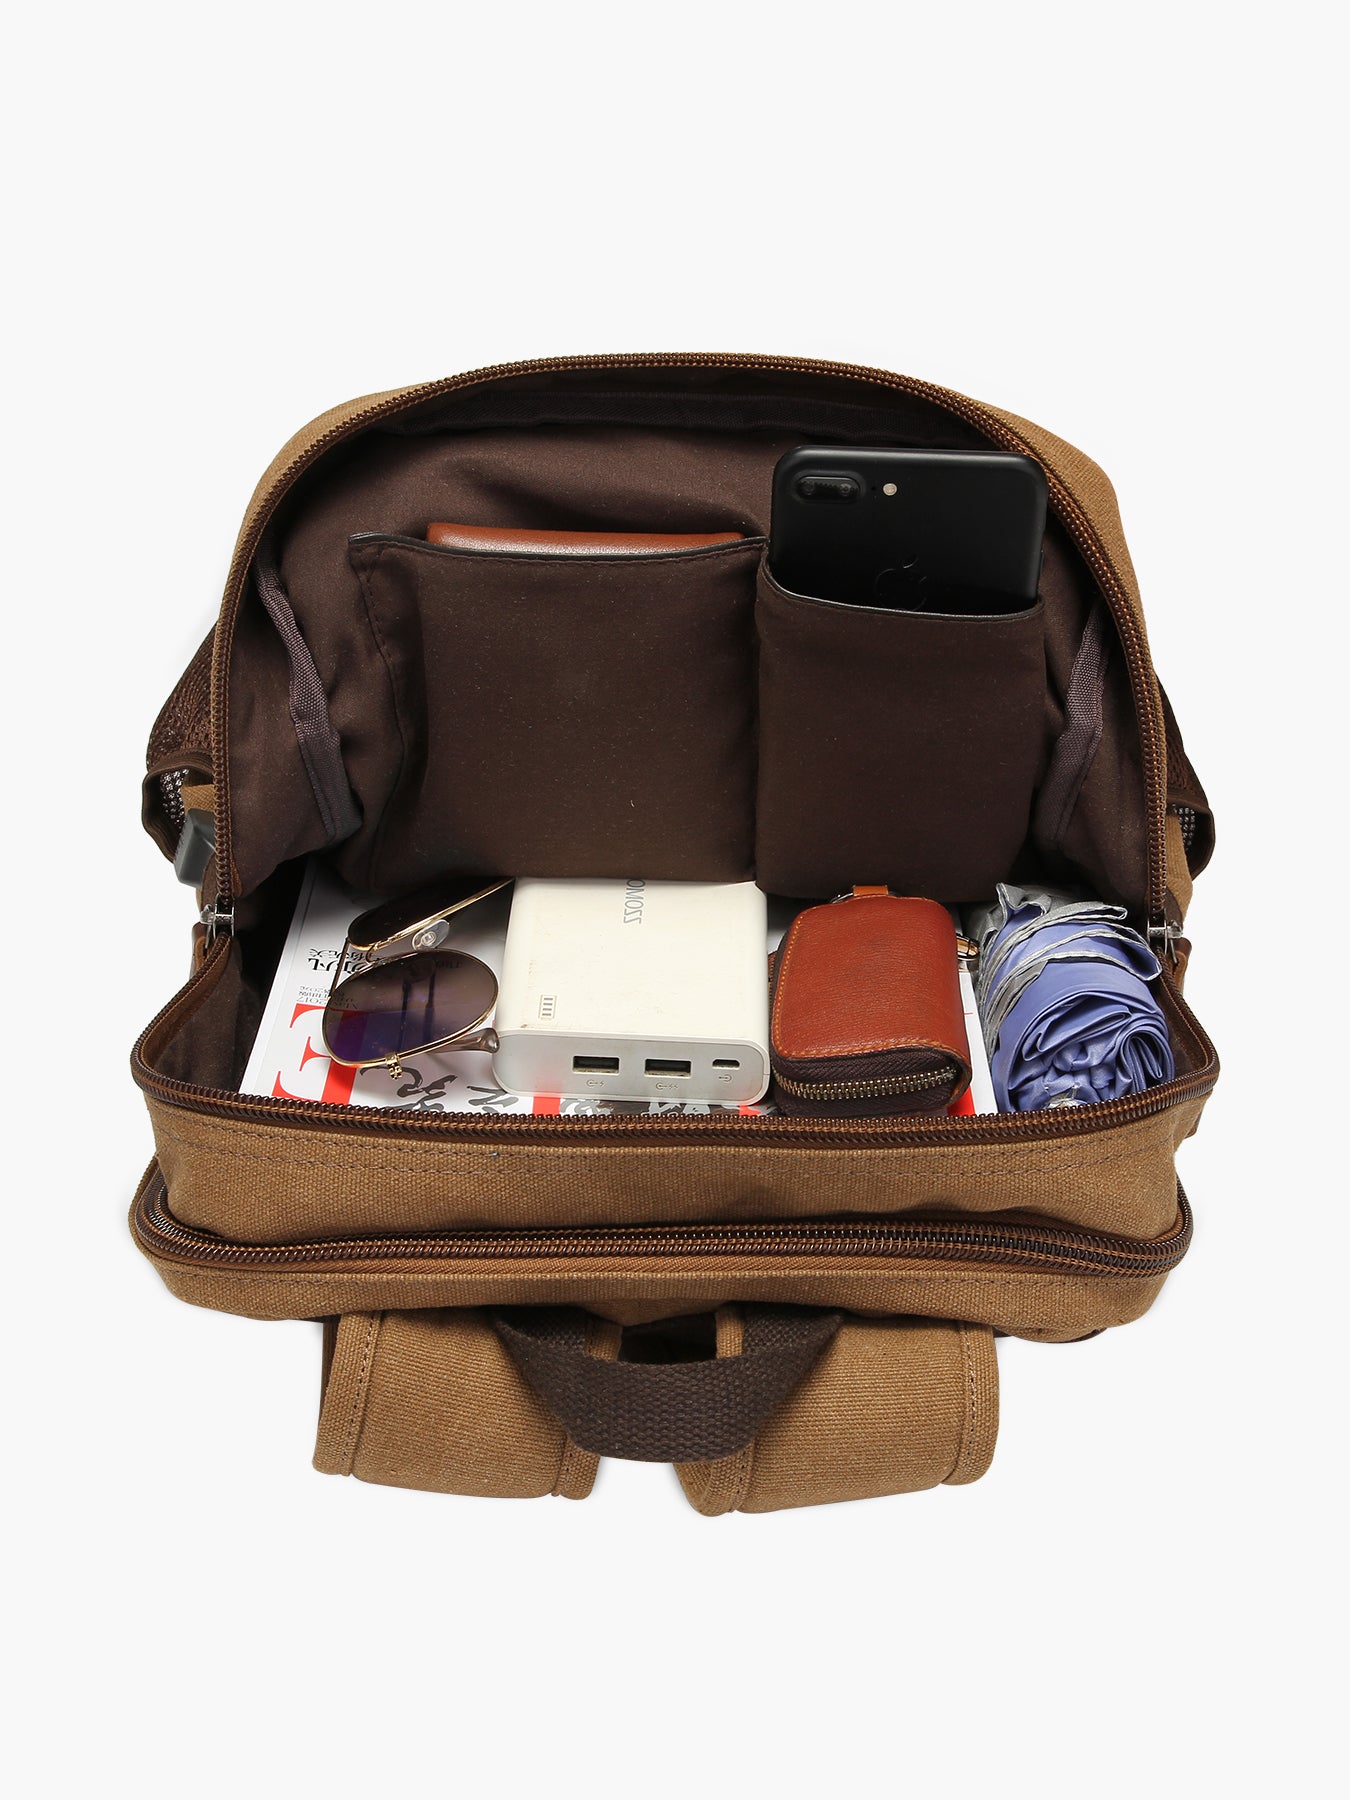 Modoker Canvas Vintage 15.6 Inch Laptop Backpack With USB Charging Port- Brown